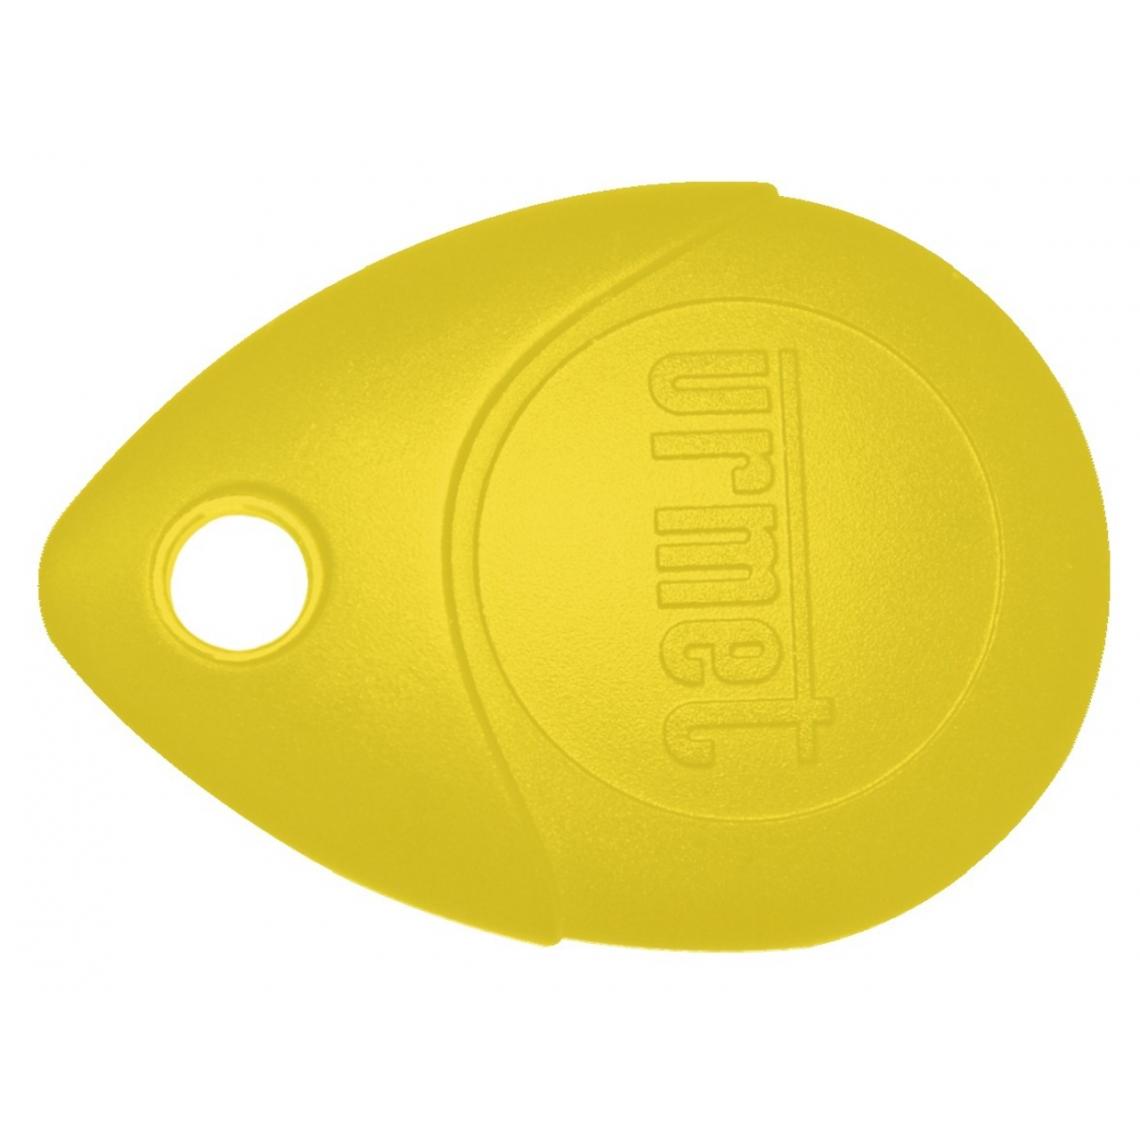 Urmet - badge / clé de proximité - 13.56 - jaune - urmet memoprox/j - Accessoires de motorisation